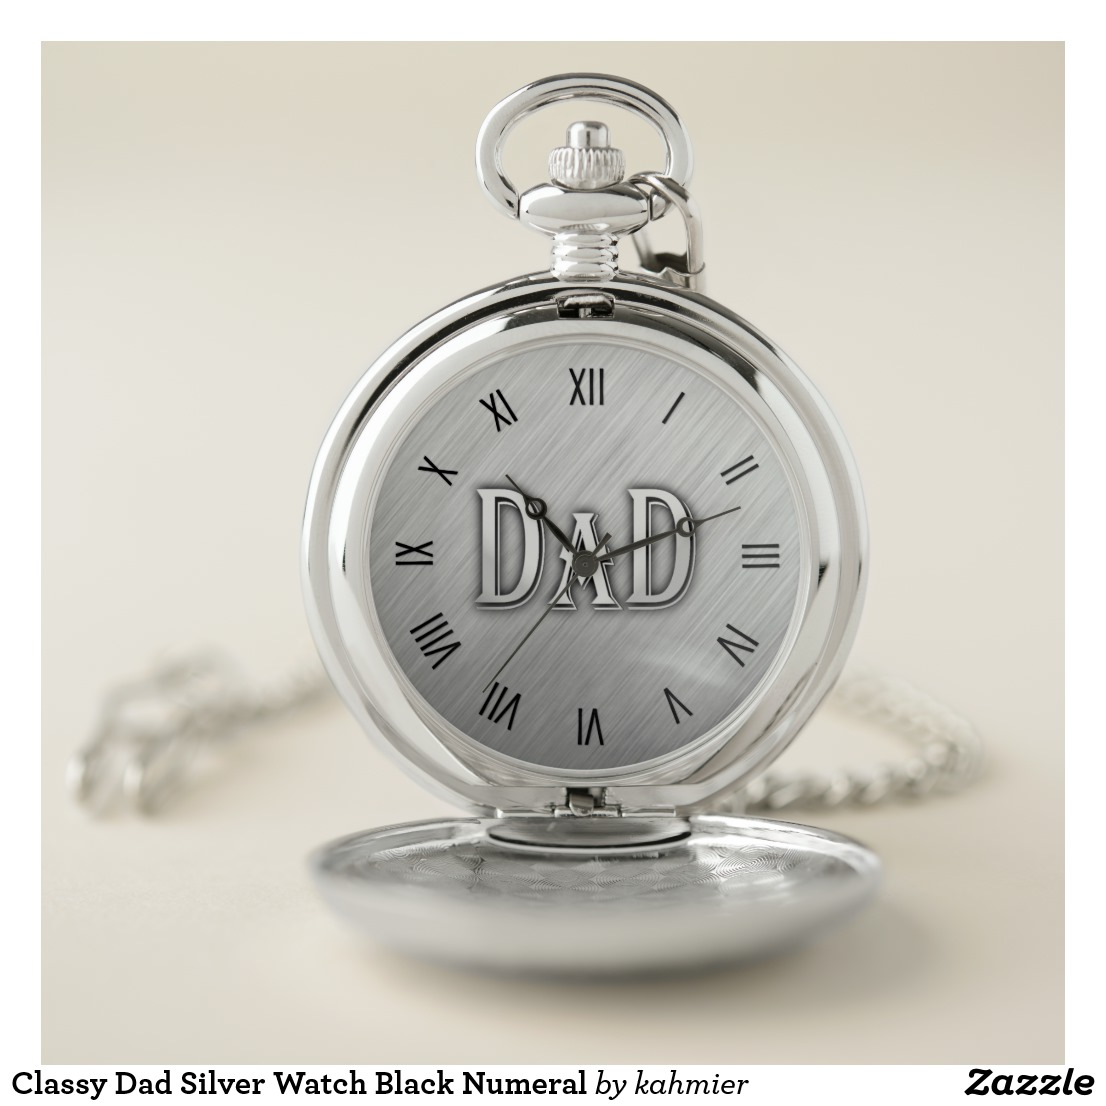 Classy Dad Silver Watch Black Numeral